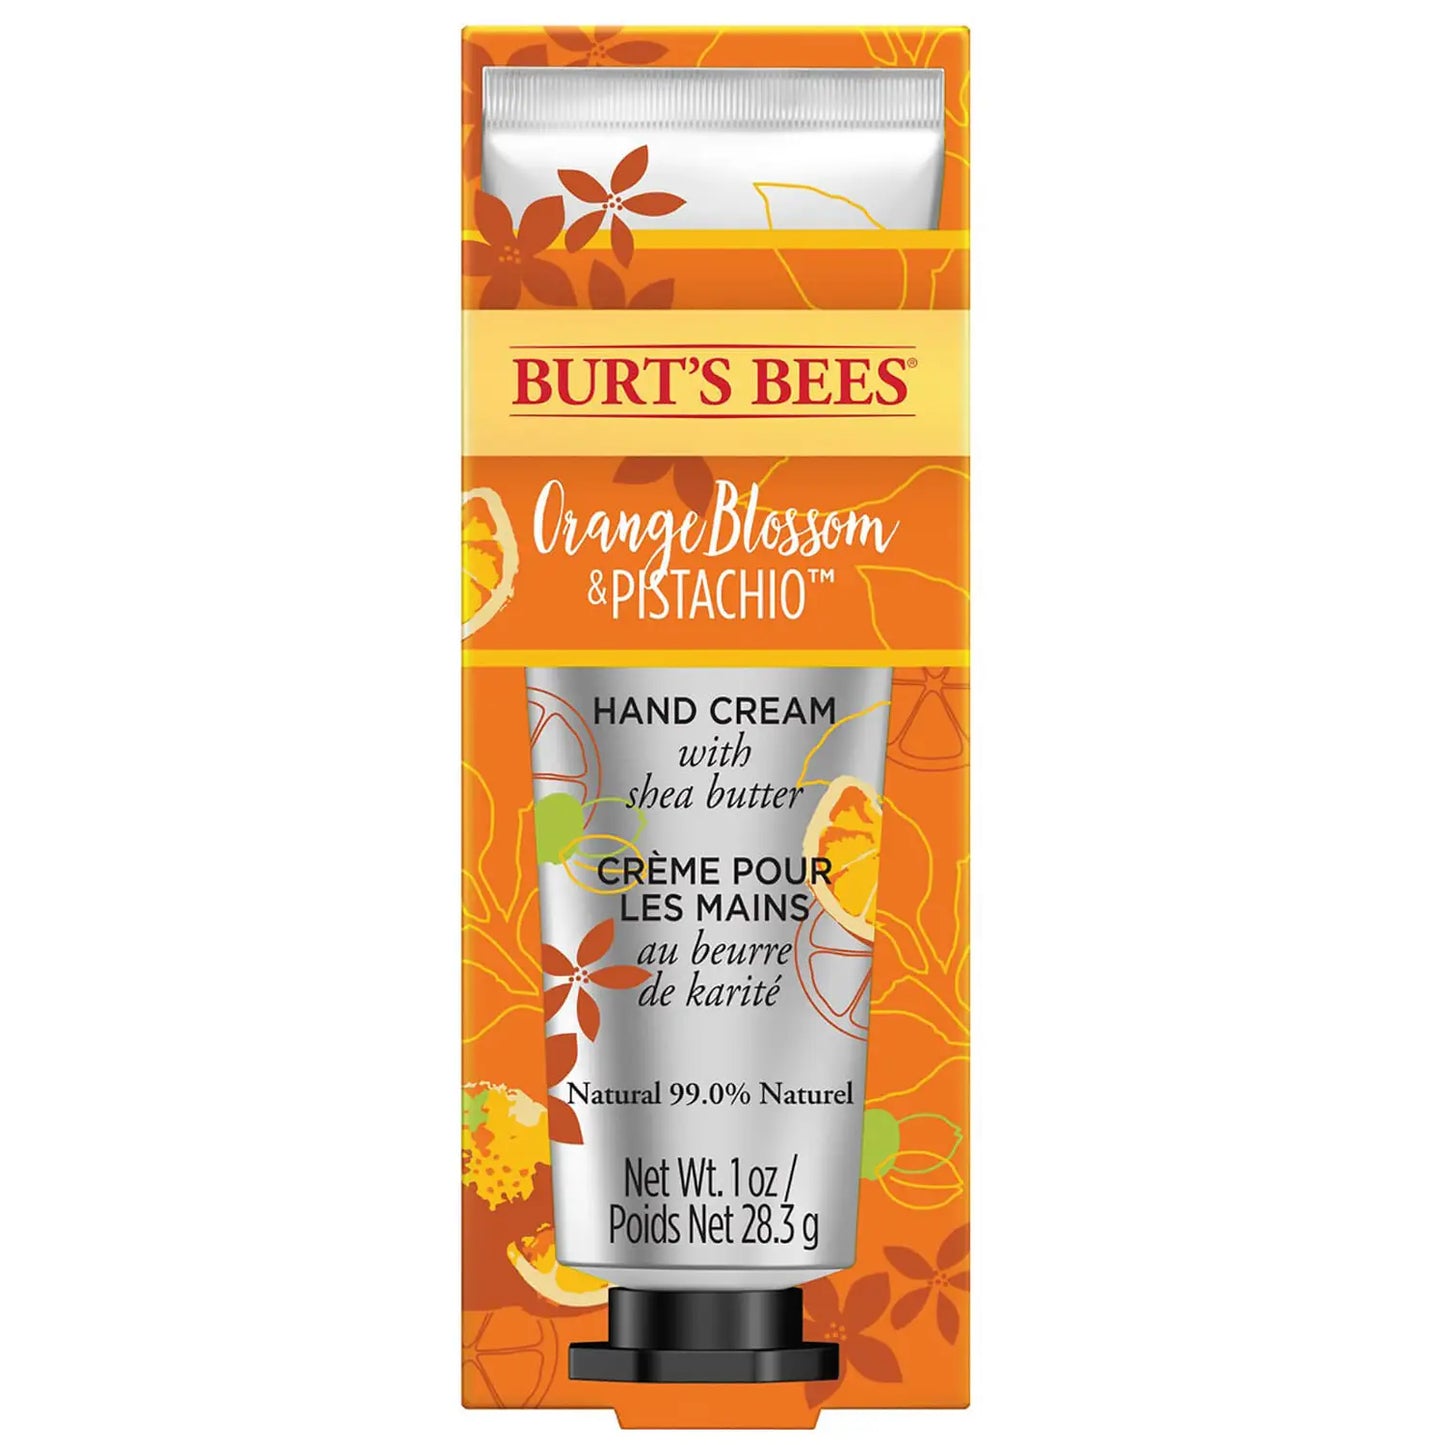 BURT'S BEES | HAND CREAM WITH SHEA BUTTER, ORANGE BLOSSOM AND PISTACHIO